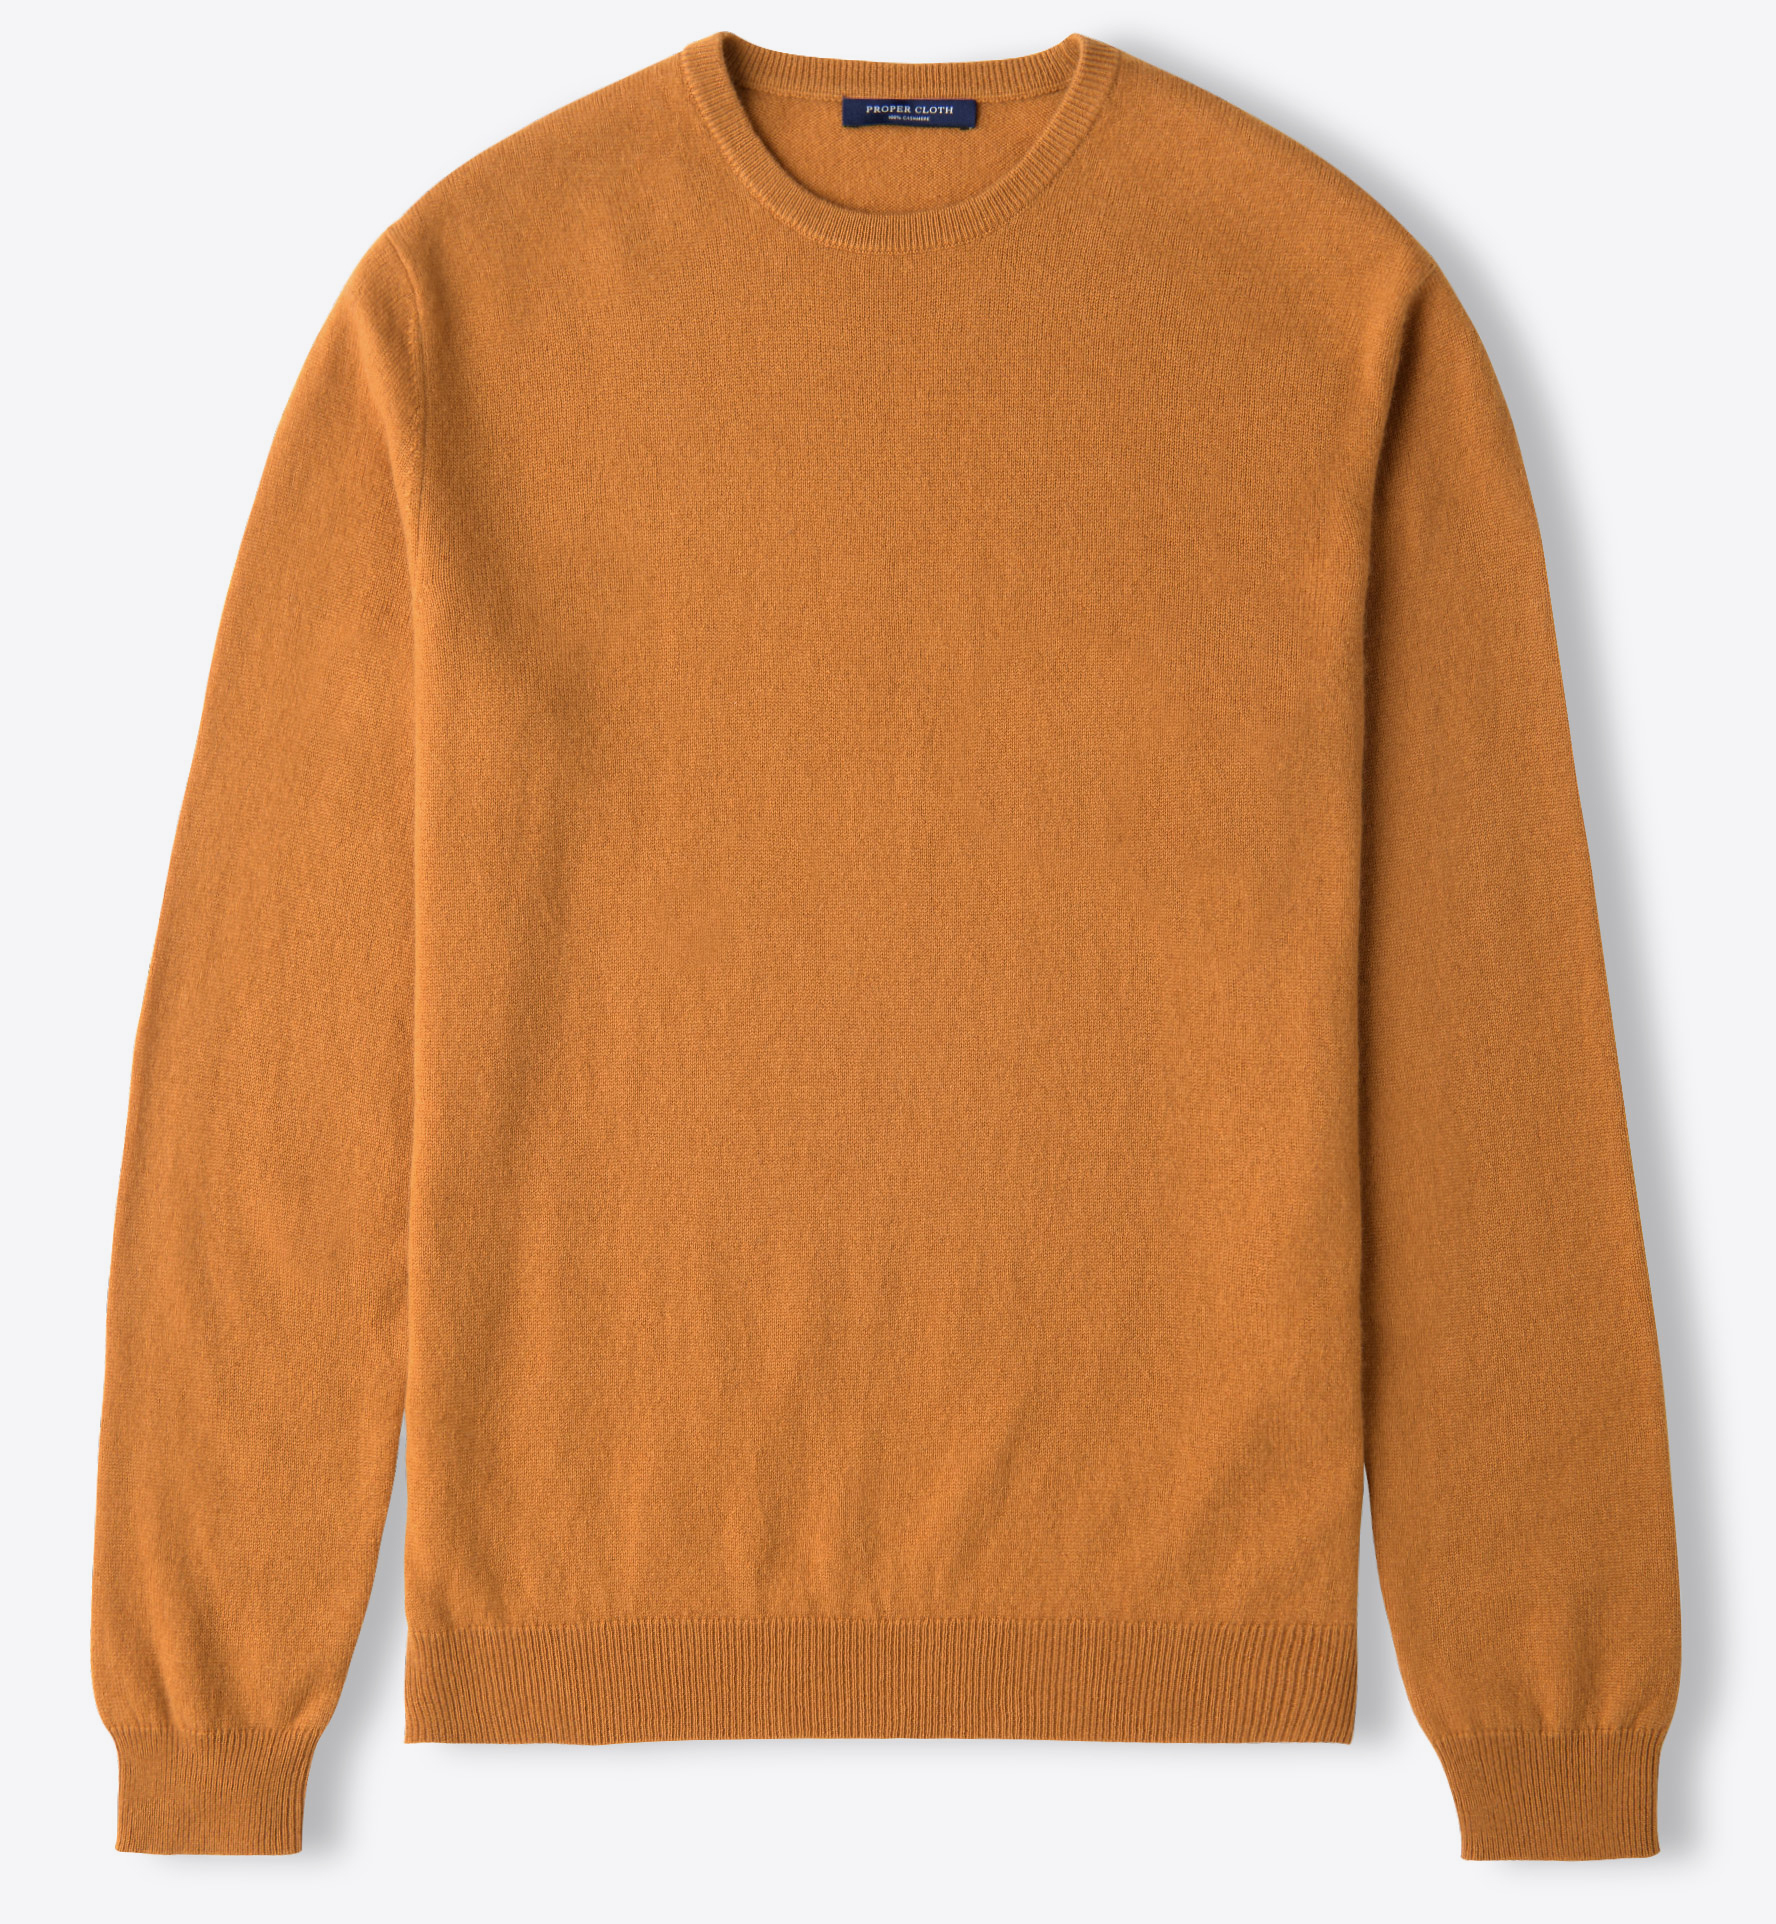 Ochre Cashmere Crewneck Sweater by Proper Cloth